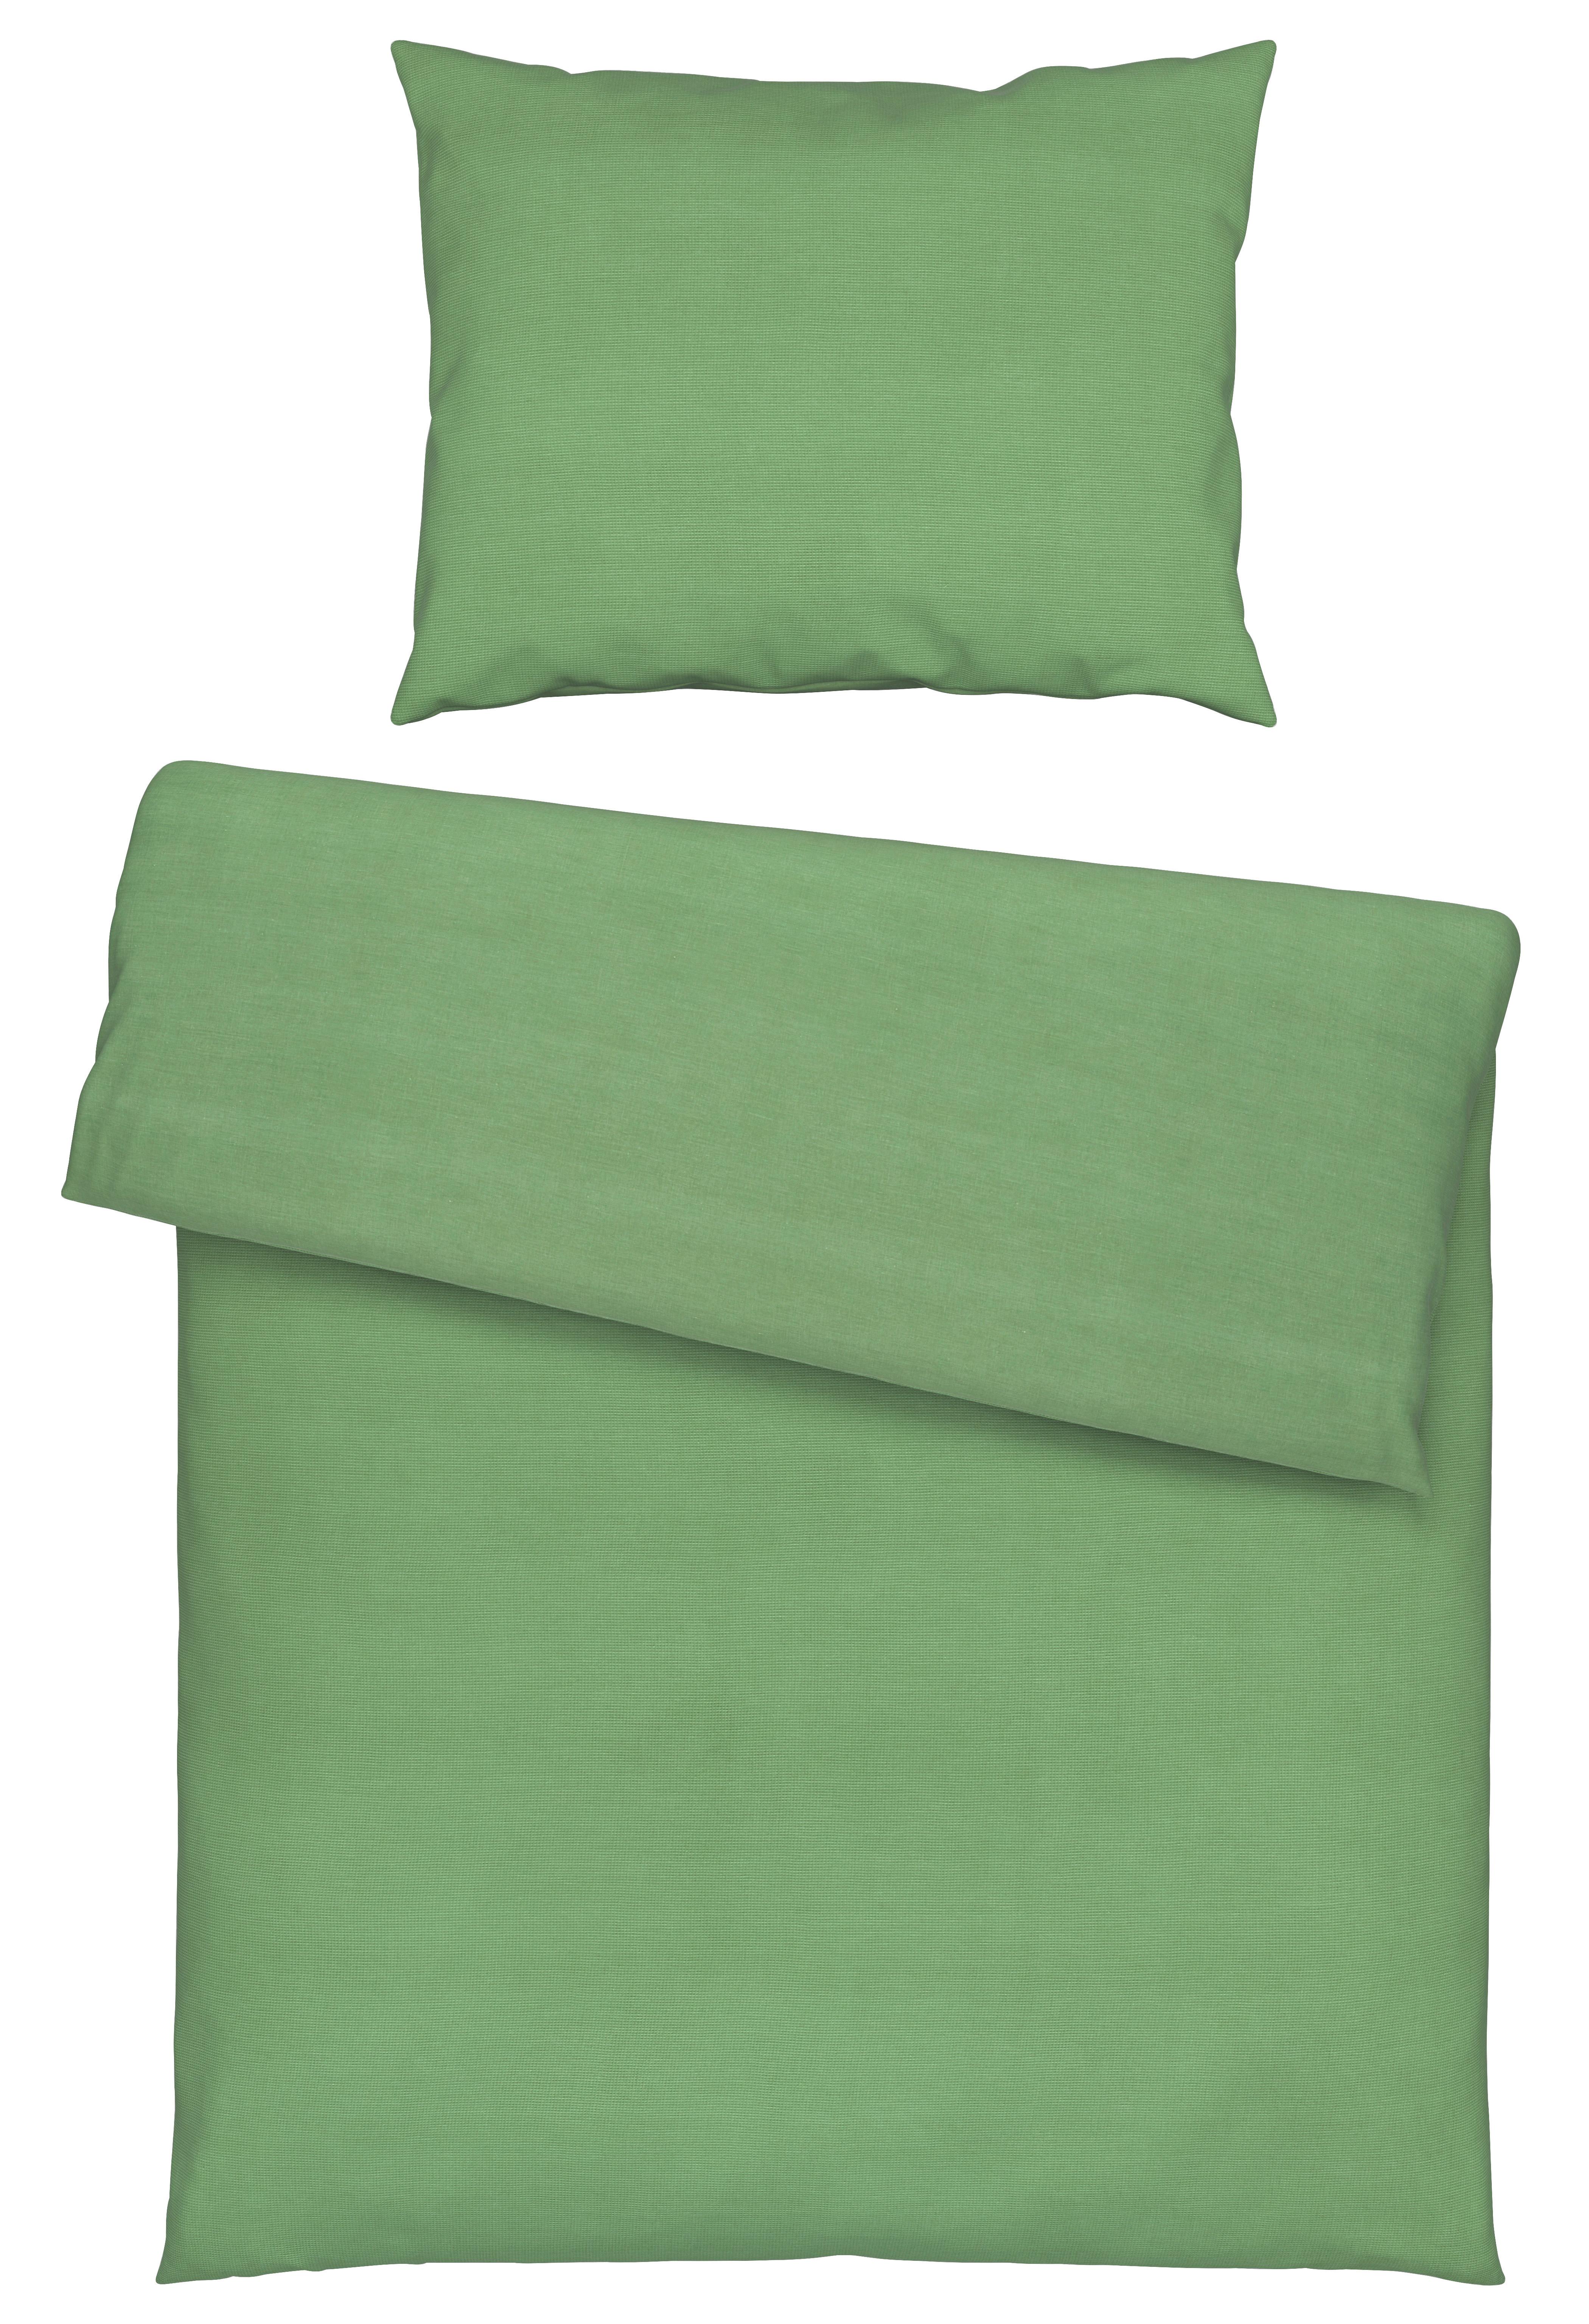 Posteľná Bielizeň Waffel, 140/200cm, Zelená - zelená, Moderný, textil (140/200cm) - Modern Living